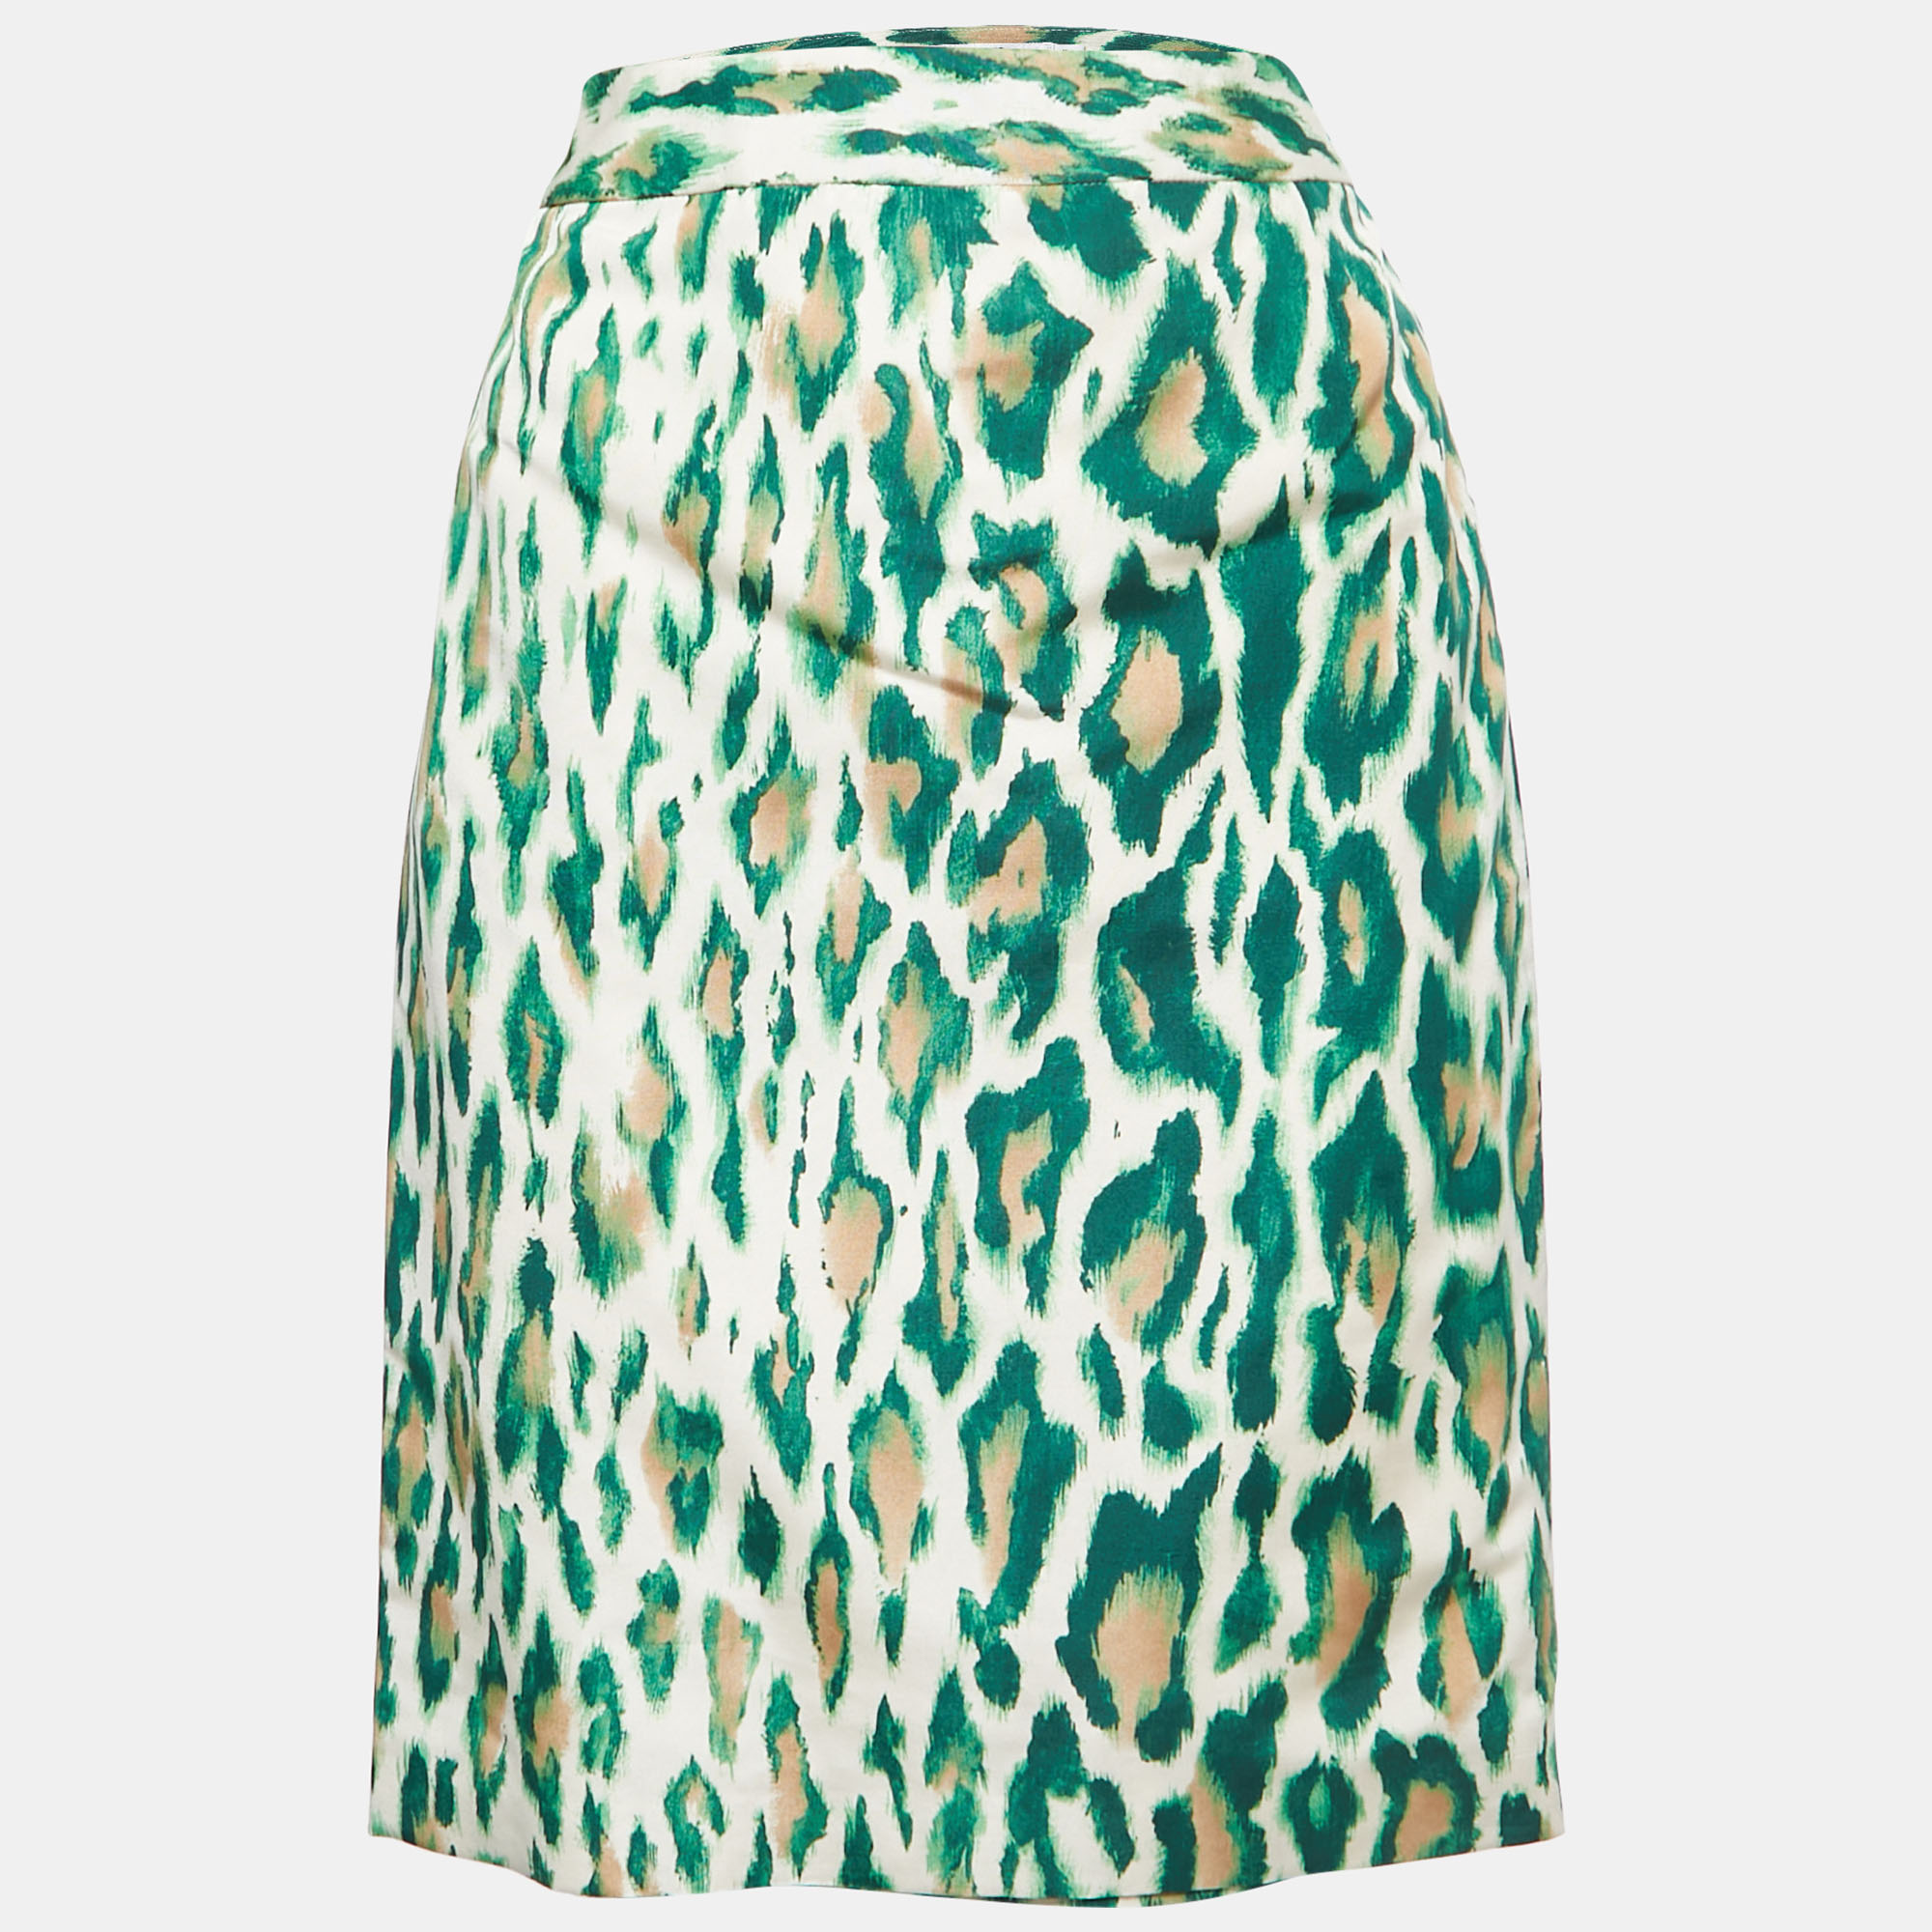 Christian dior green animal print silk pencil skirt s